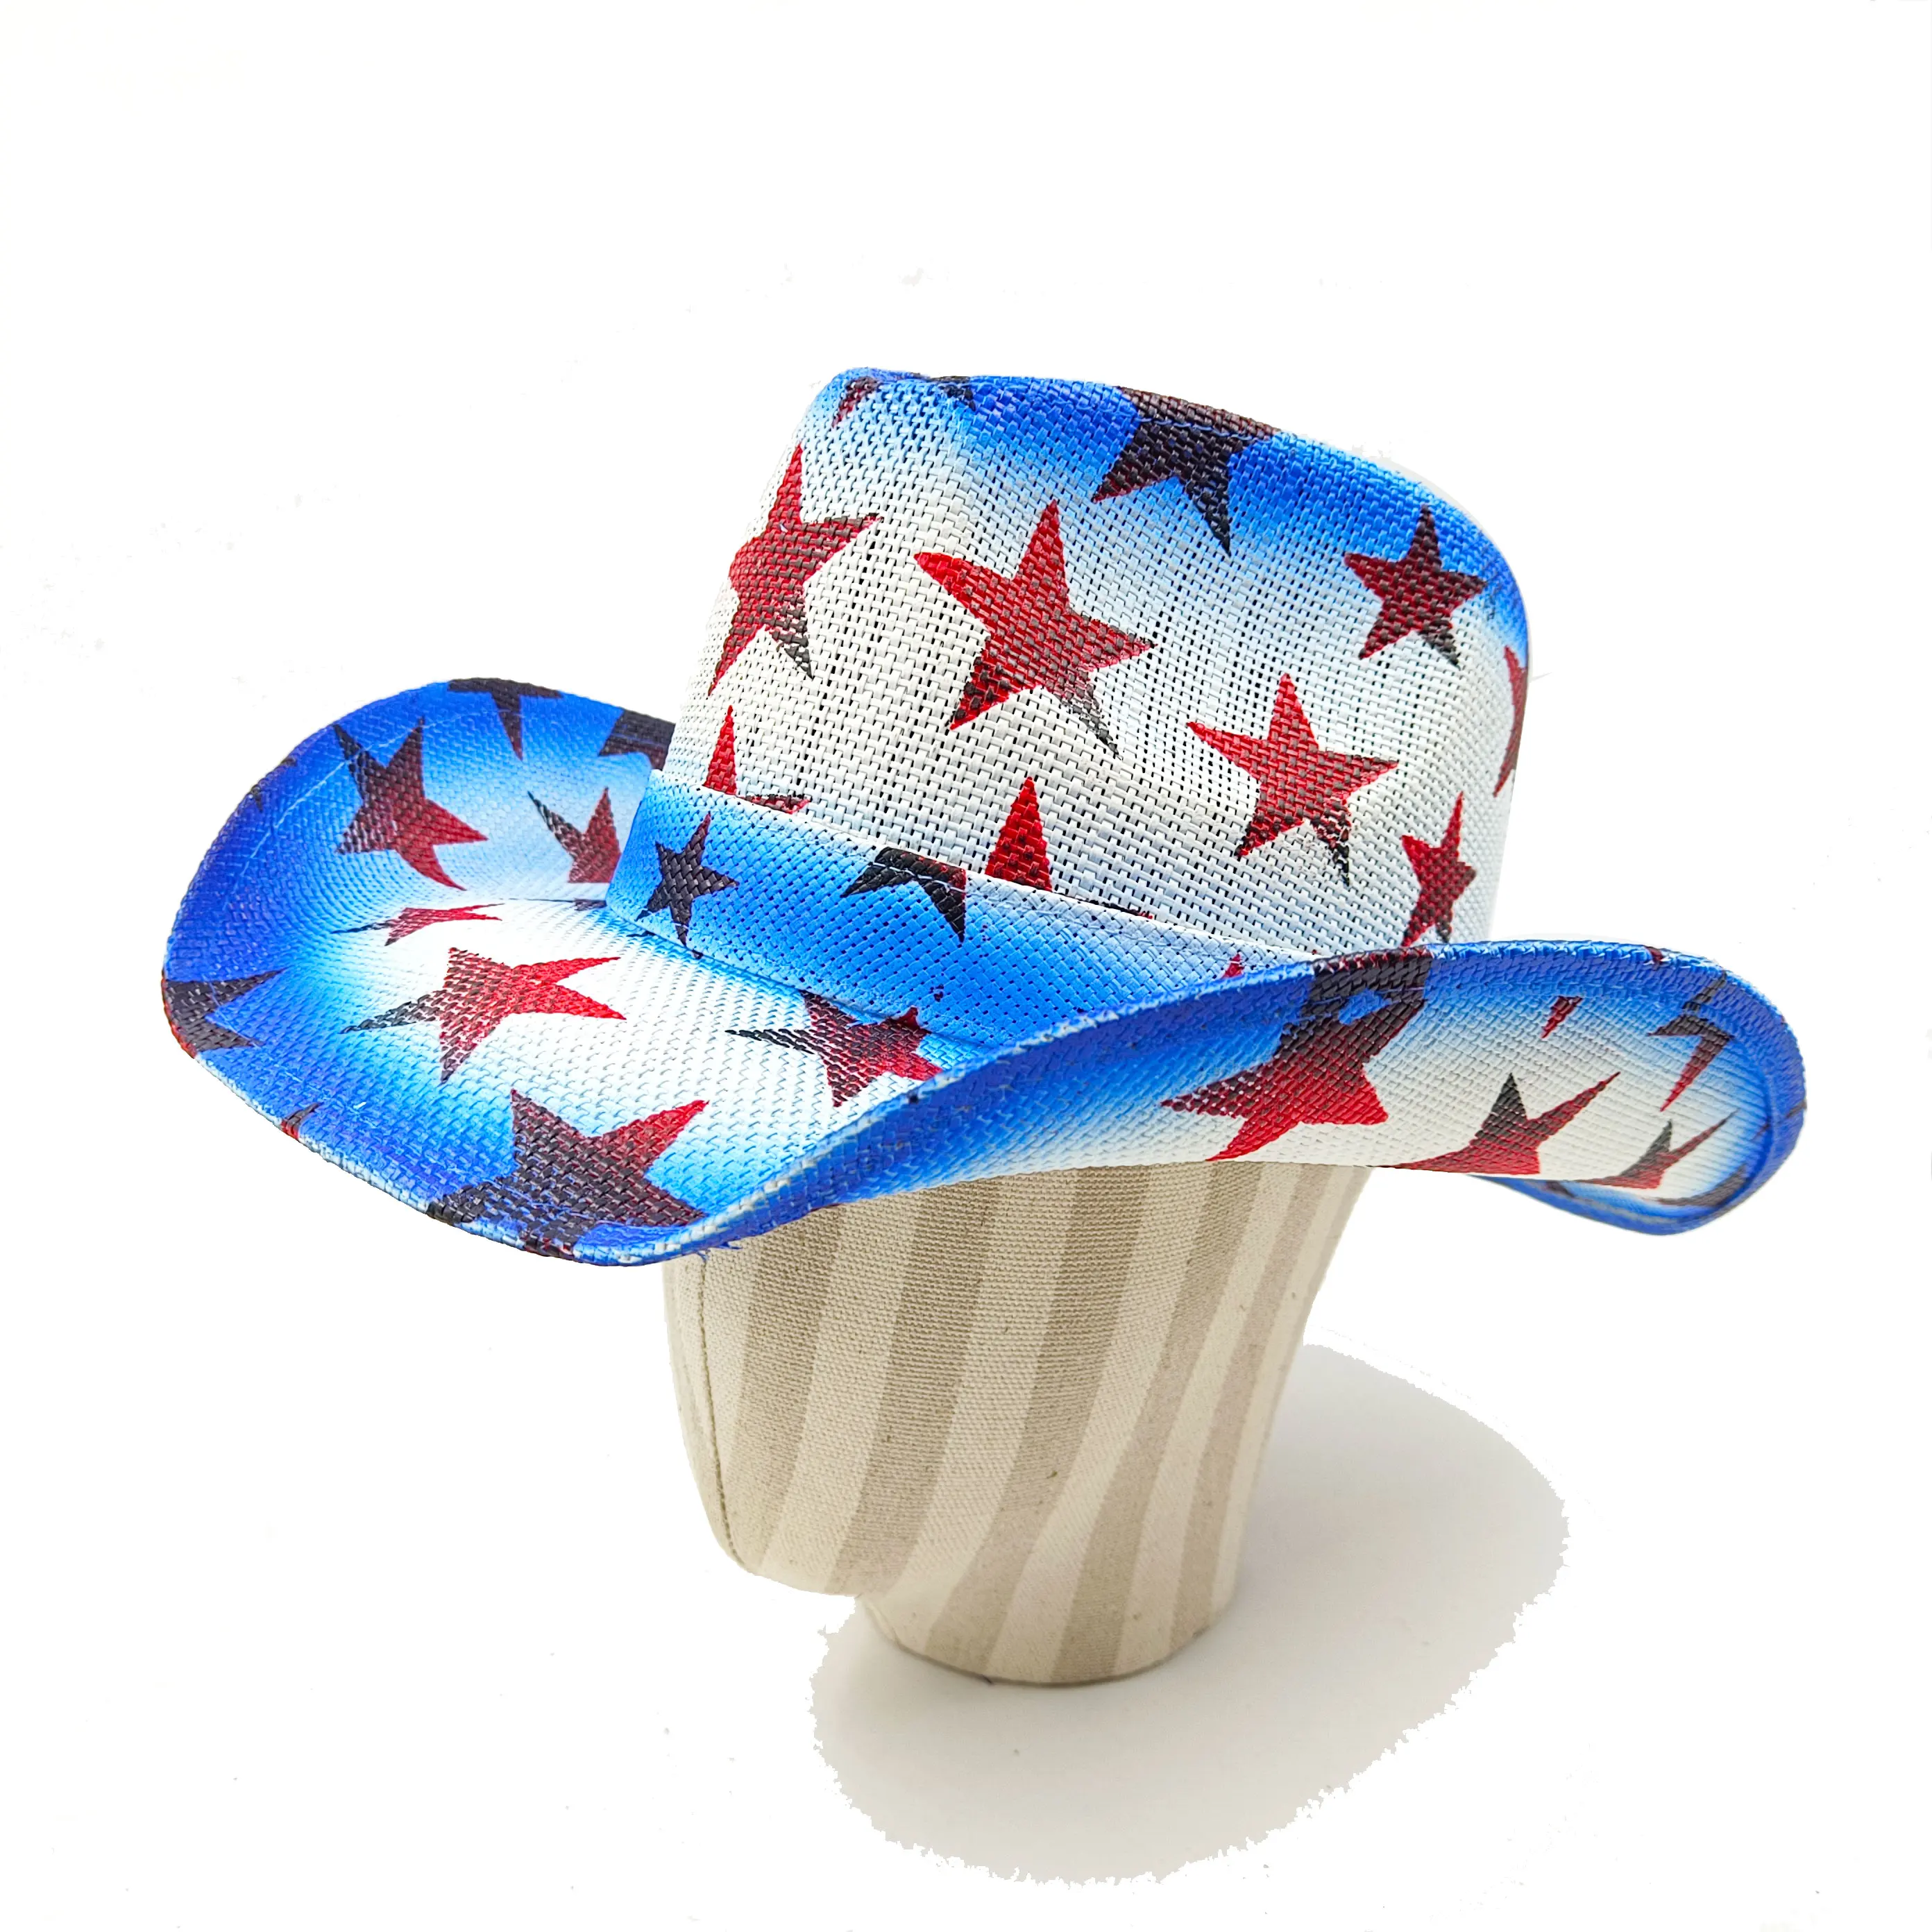  - Cowboy Hat Fashion Printing Old Straw Hat Men's Summer Outdoor Travel Beach Hat Unisex Solid Western Cowboy Hat